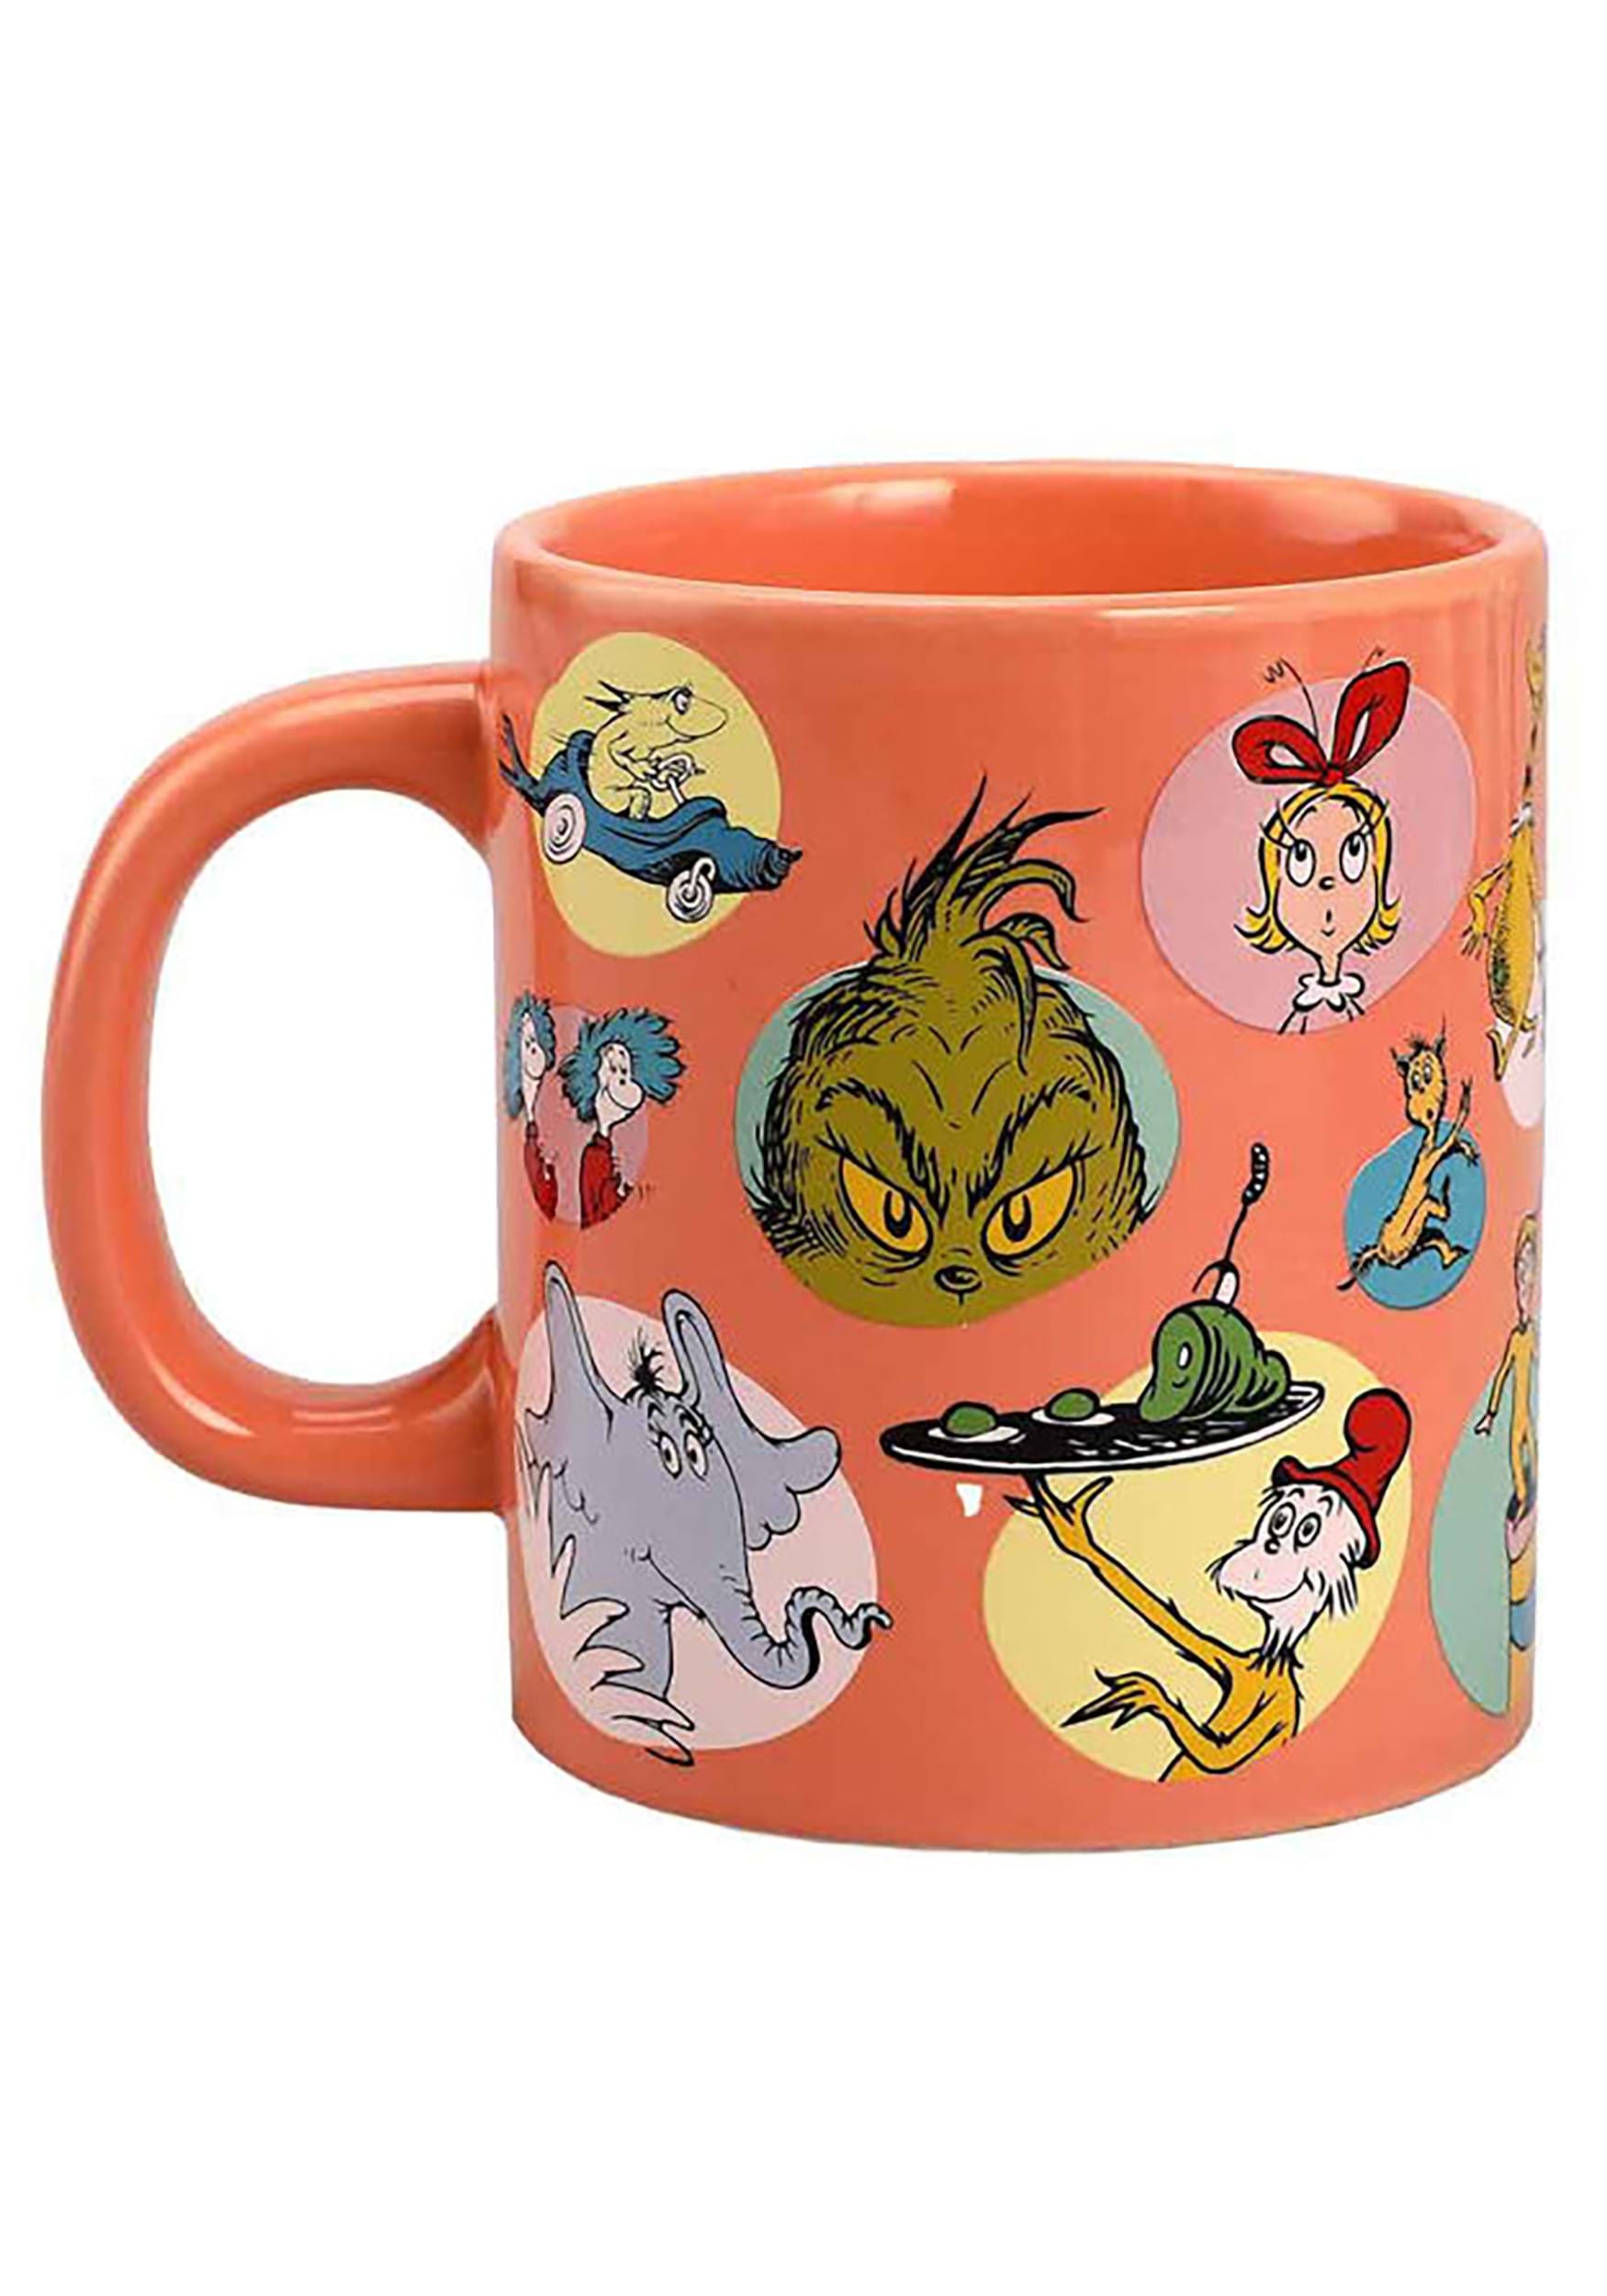 16 oz. Dr. Seuss Character Collection Ceramic Mug